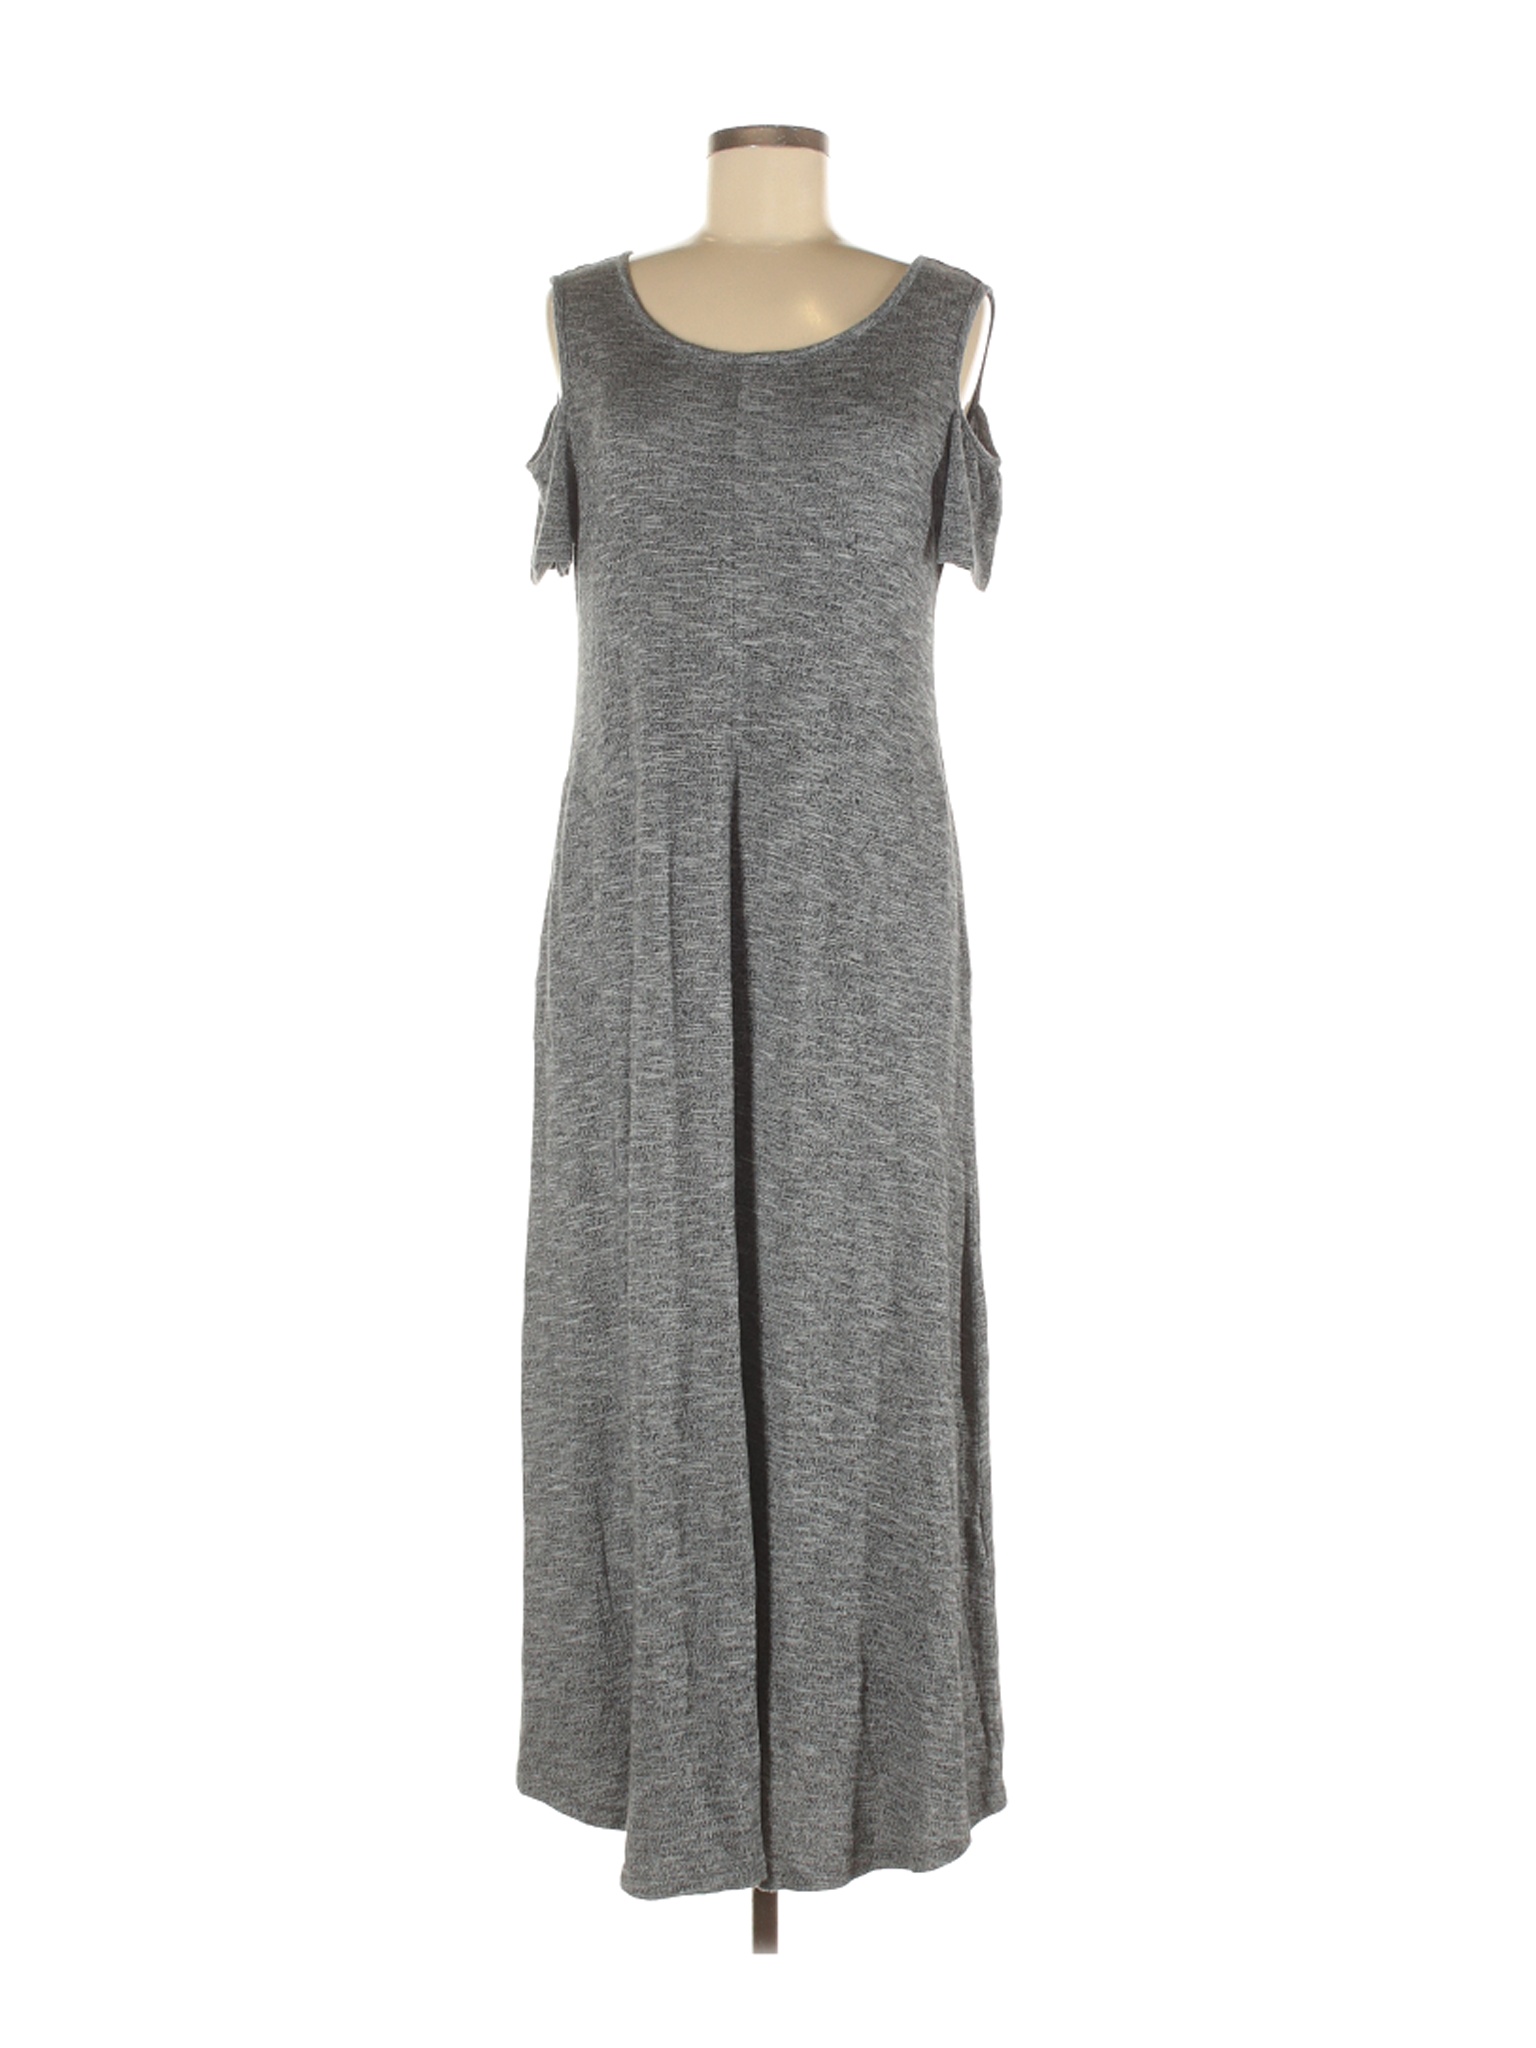 Soft Surroundings Women Gray Casual Dress M Petites | eBay